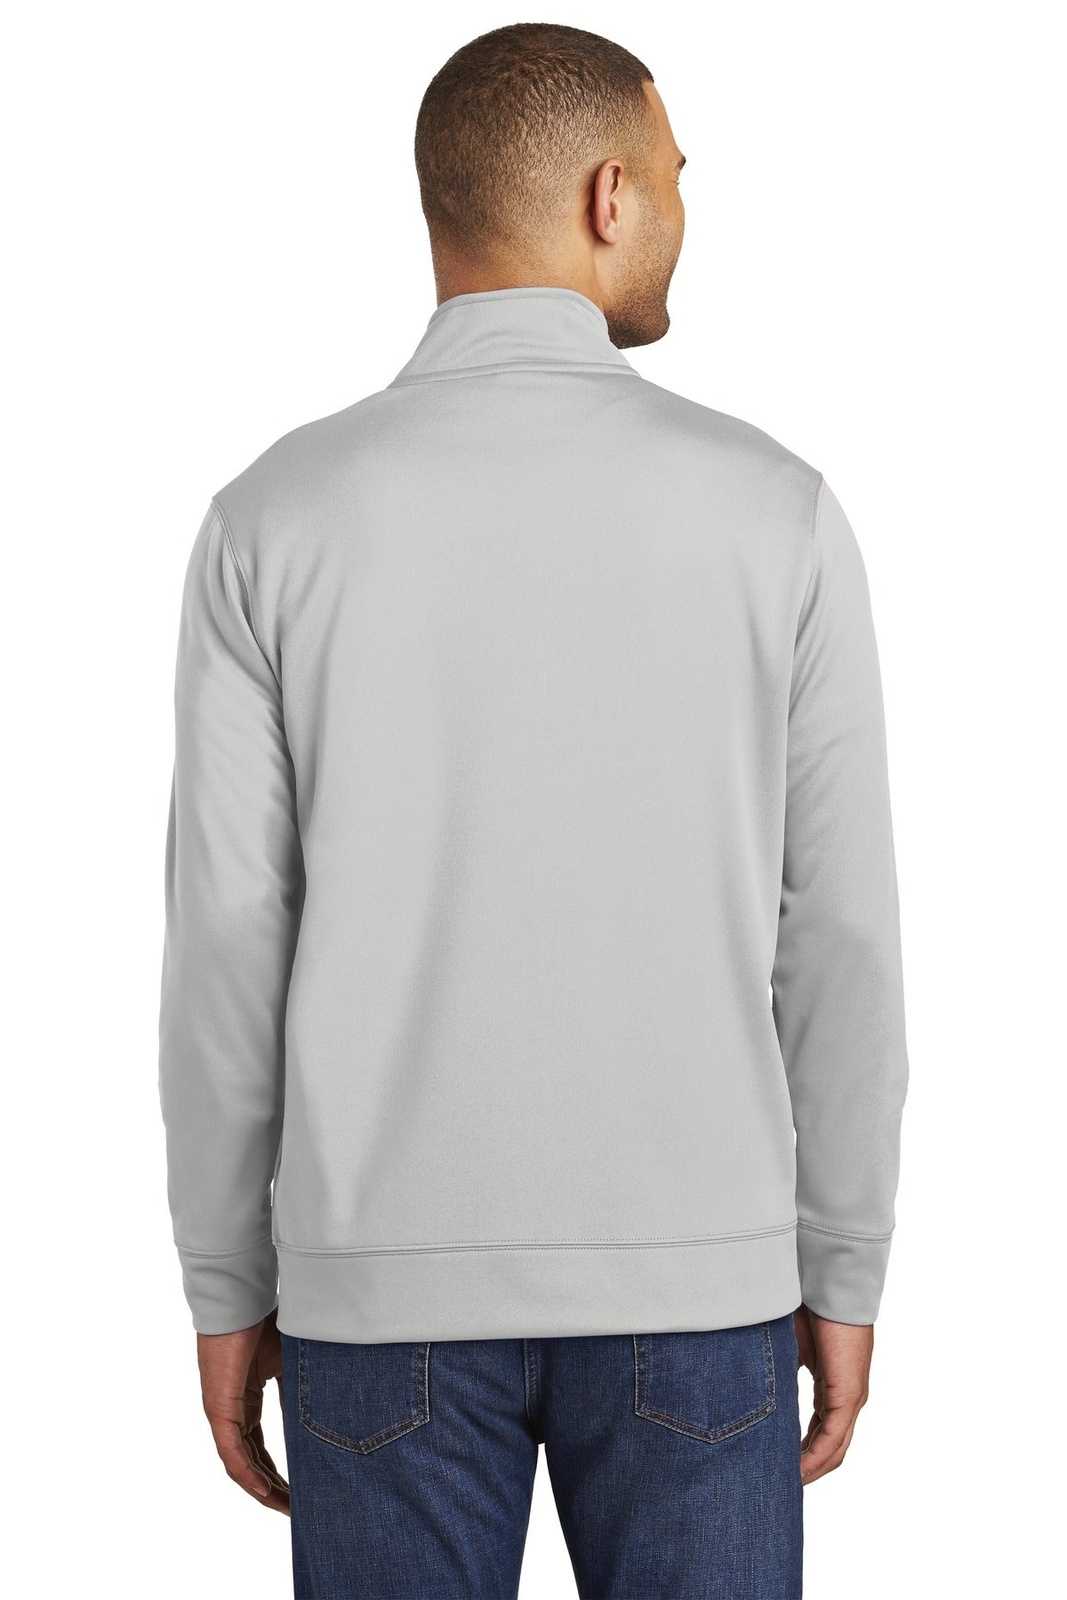 Port &amp; Company PC590Q Fleece 1/4-Zip Pullover Sweatshirt - Silver - HIT a Double - 2